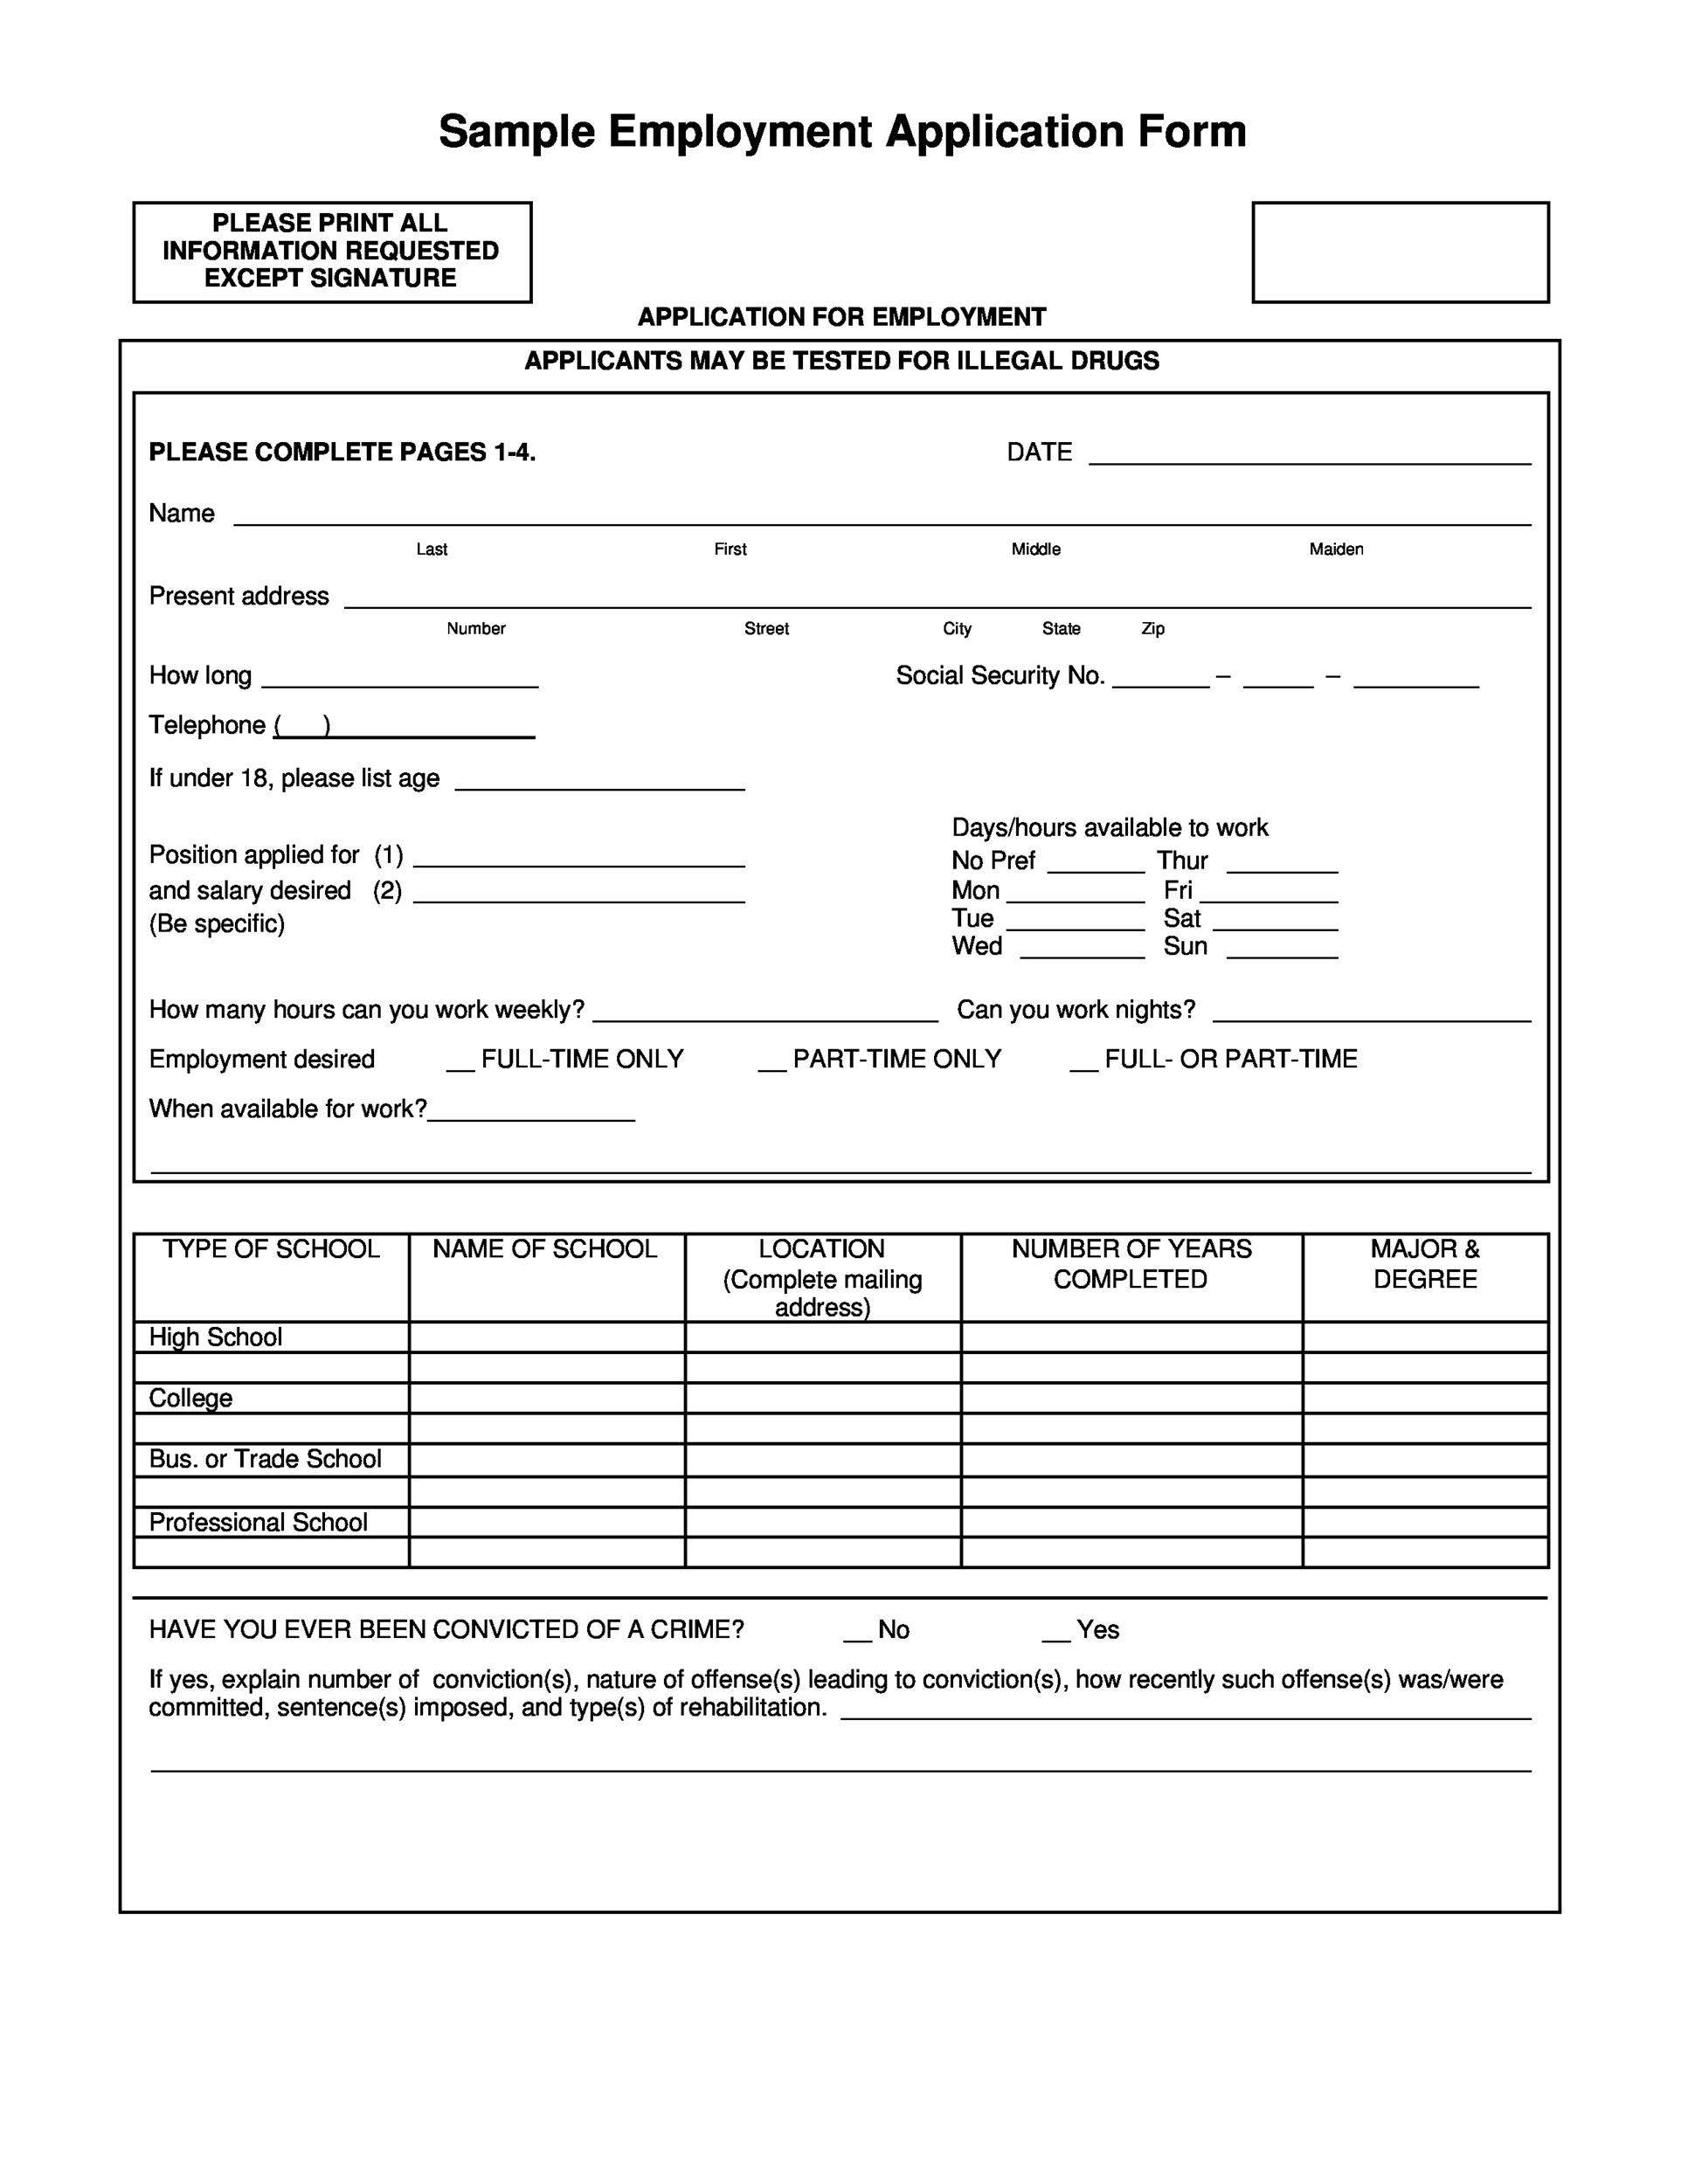 50 Free Employment Job Application Form Templates Printable Templatelab 8339